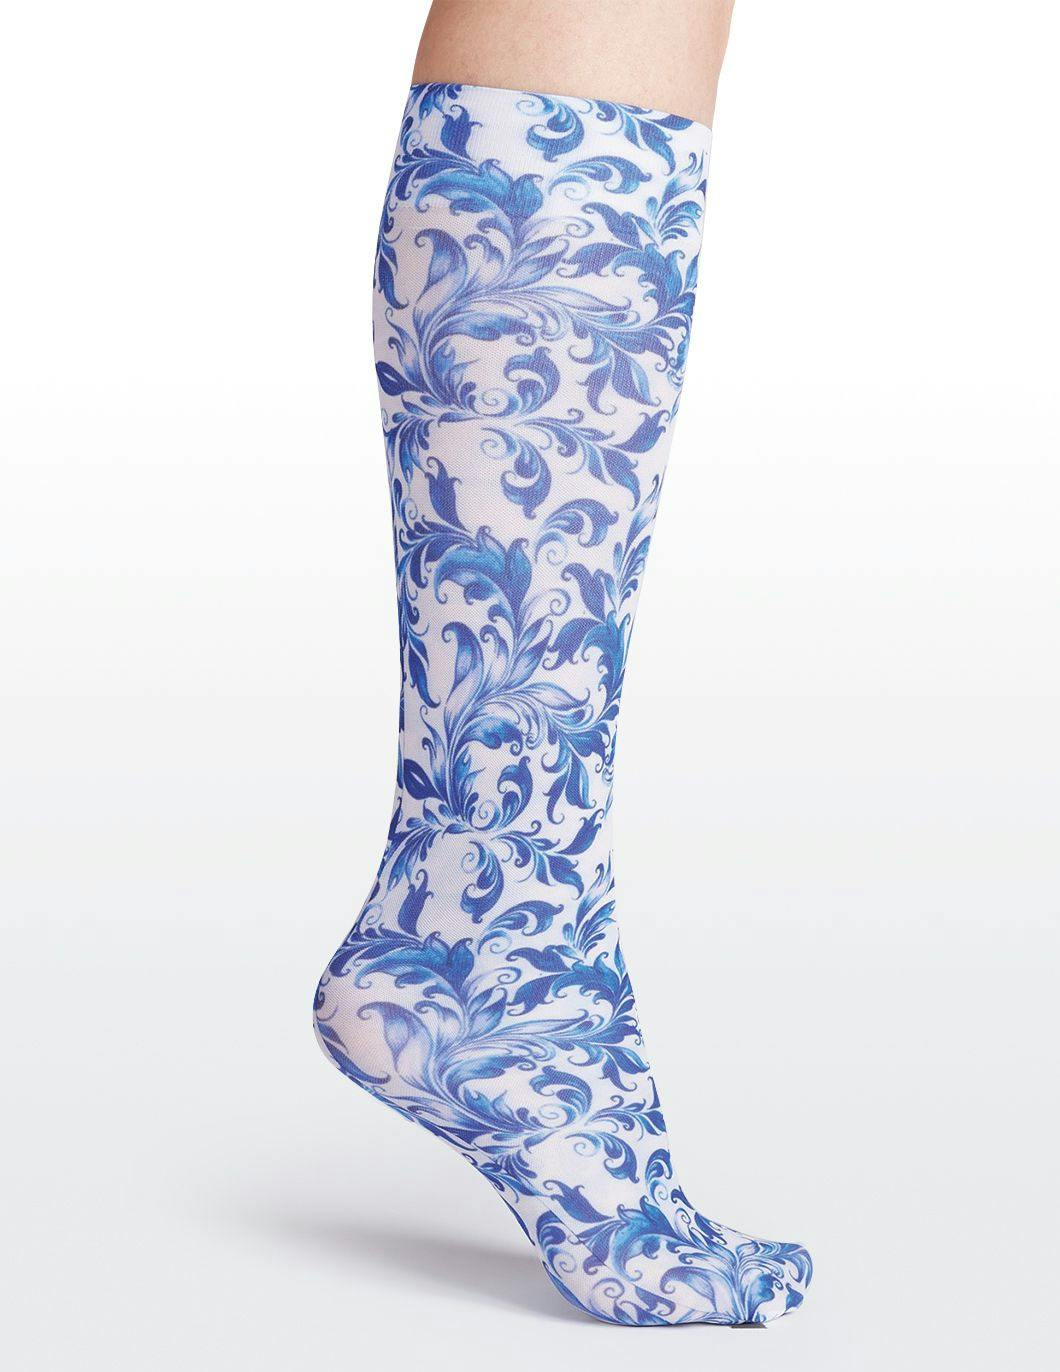 cutieful-compression-socks-blue-watercolor-flowers-print